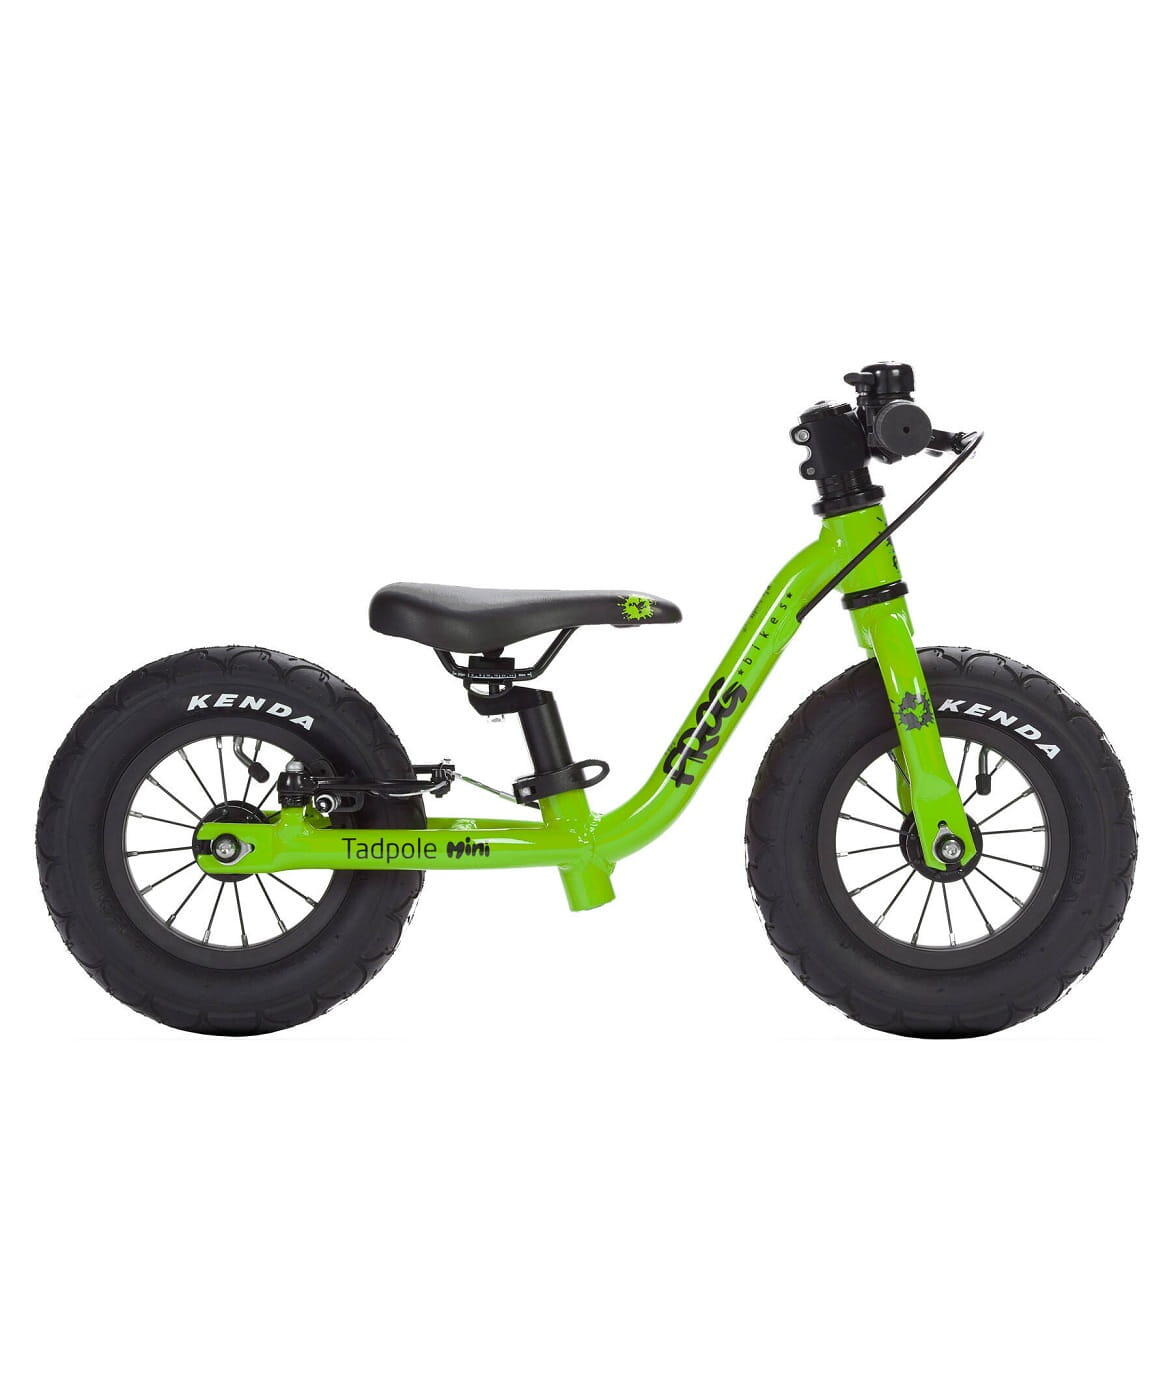 Tadpole Mini 10 Inch Lightweight Kids Balance Bike For 18 Months-2 Years - Green 1/6